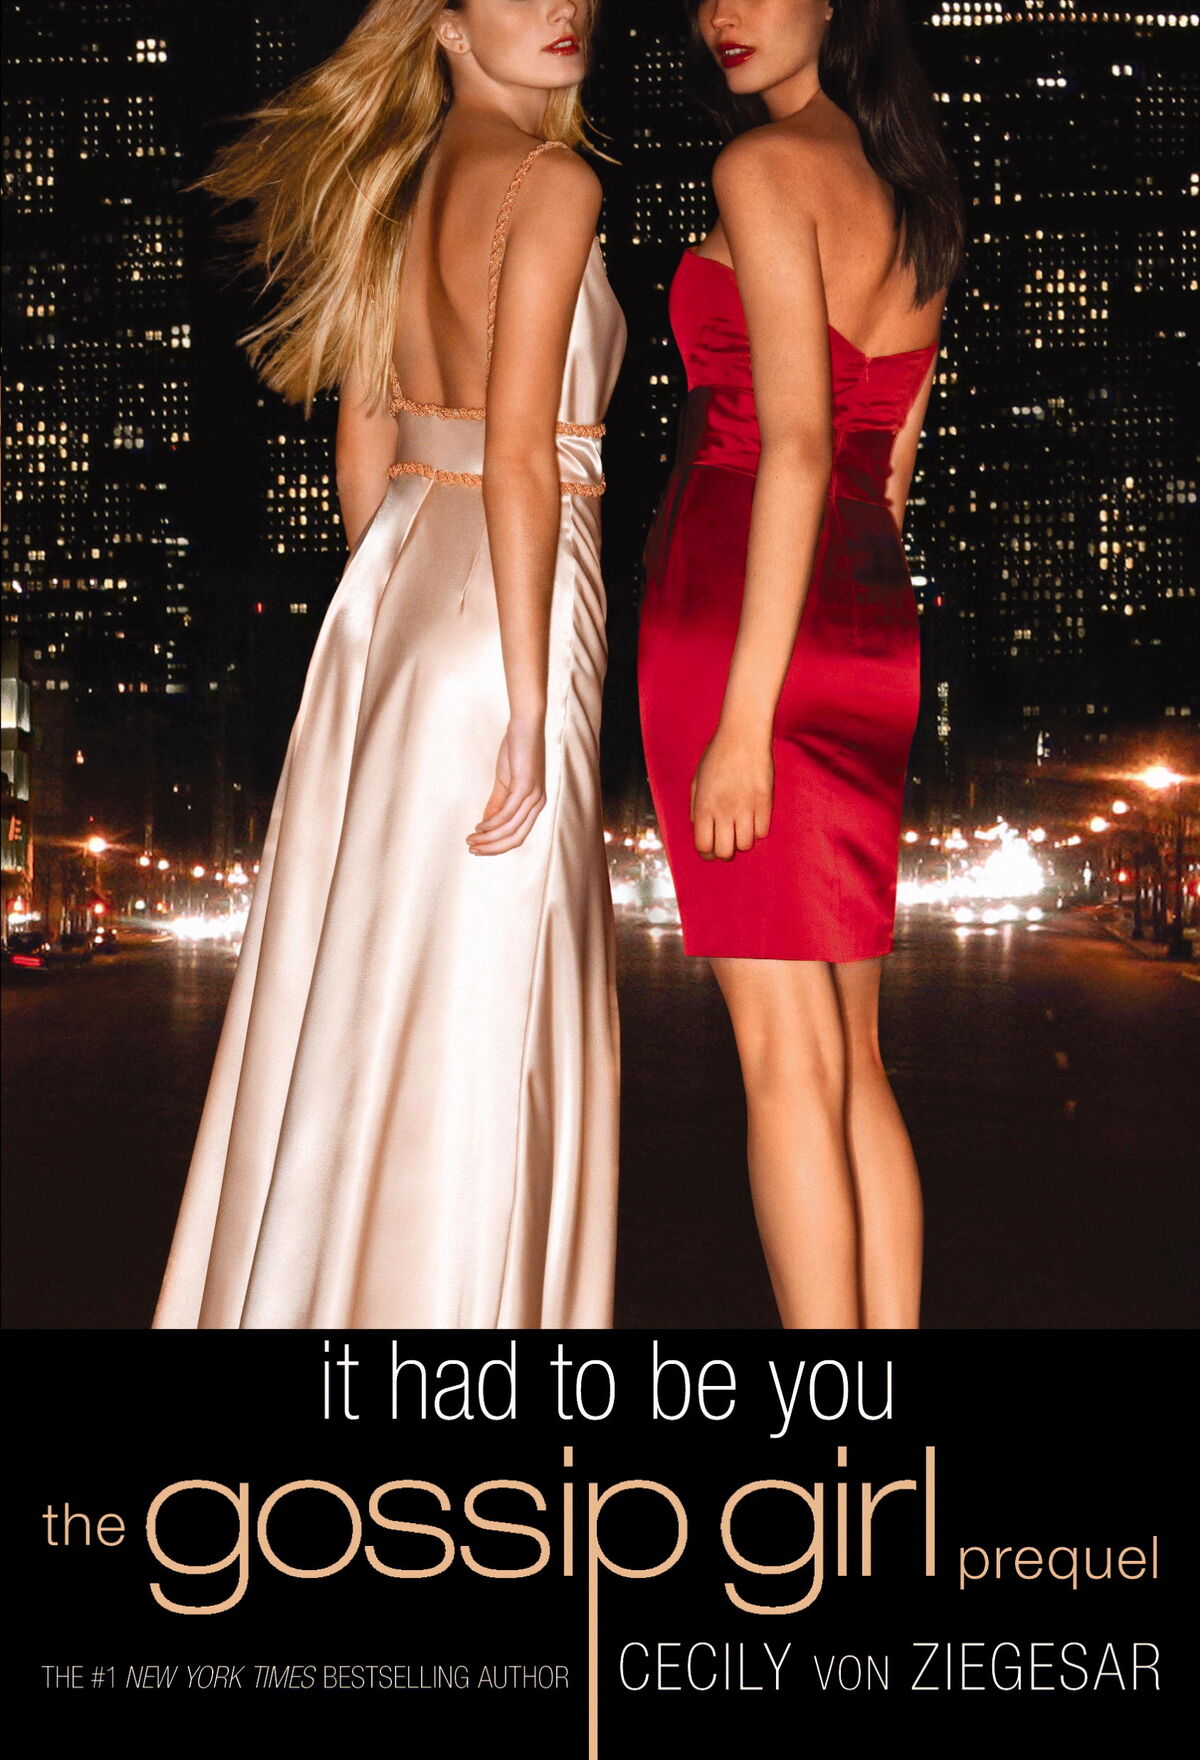 gossip girl book cover